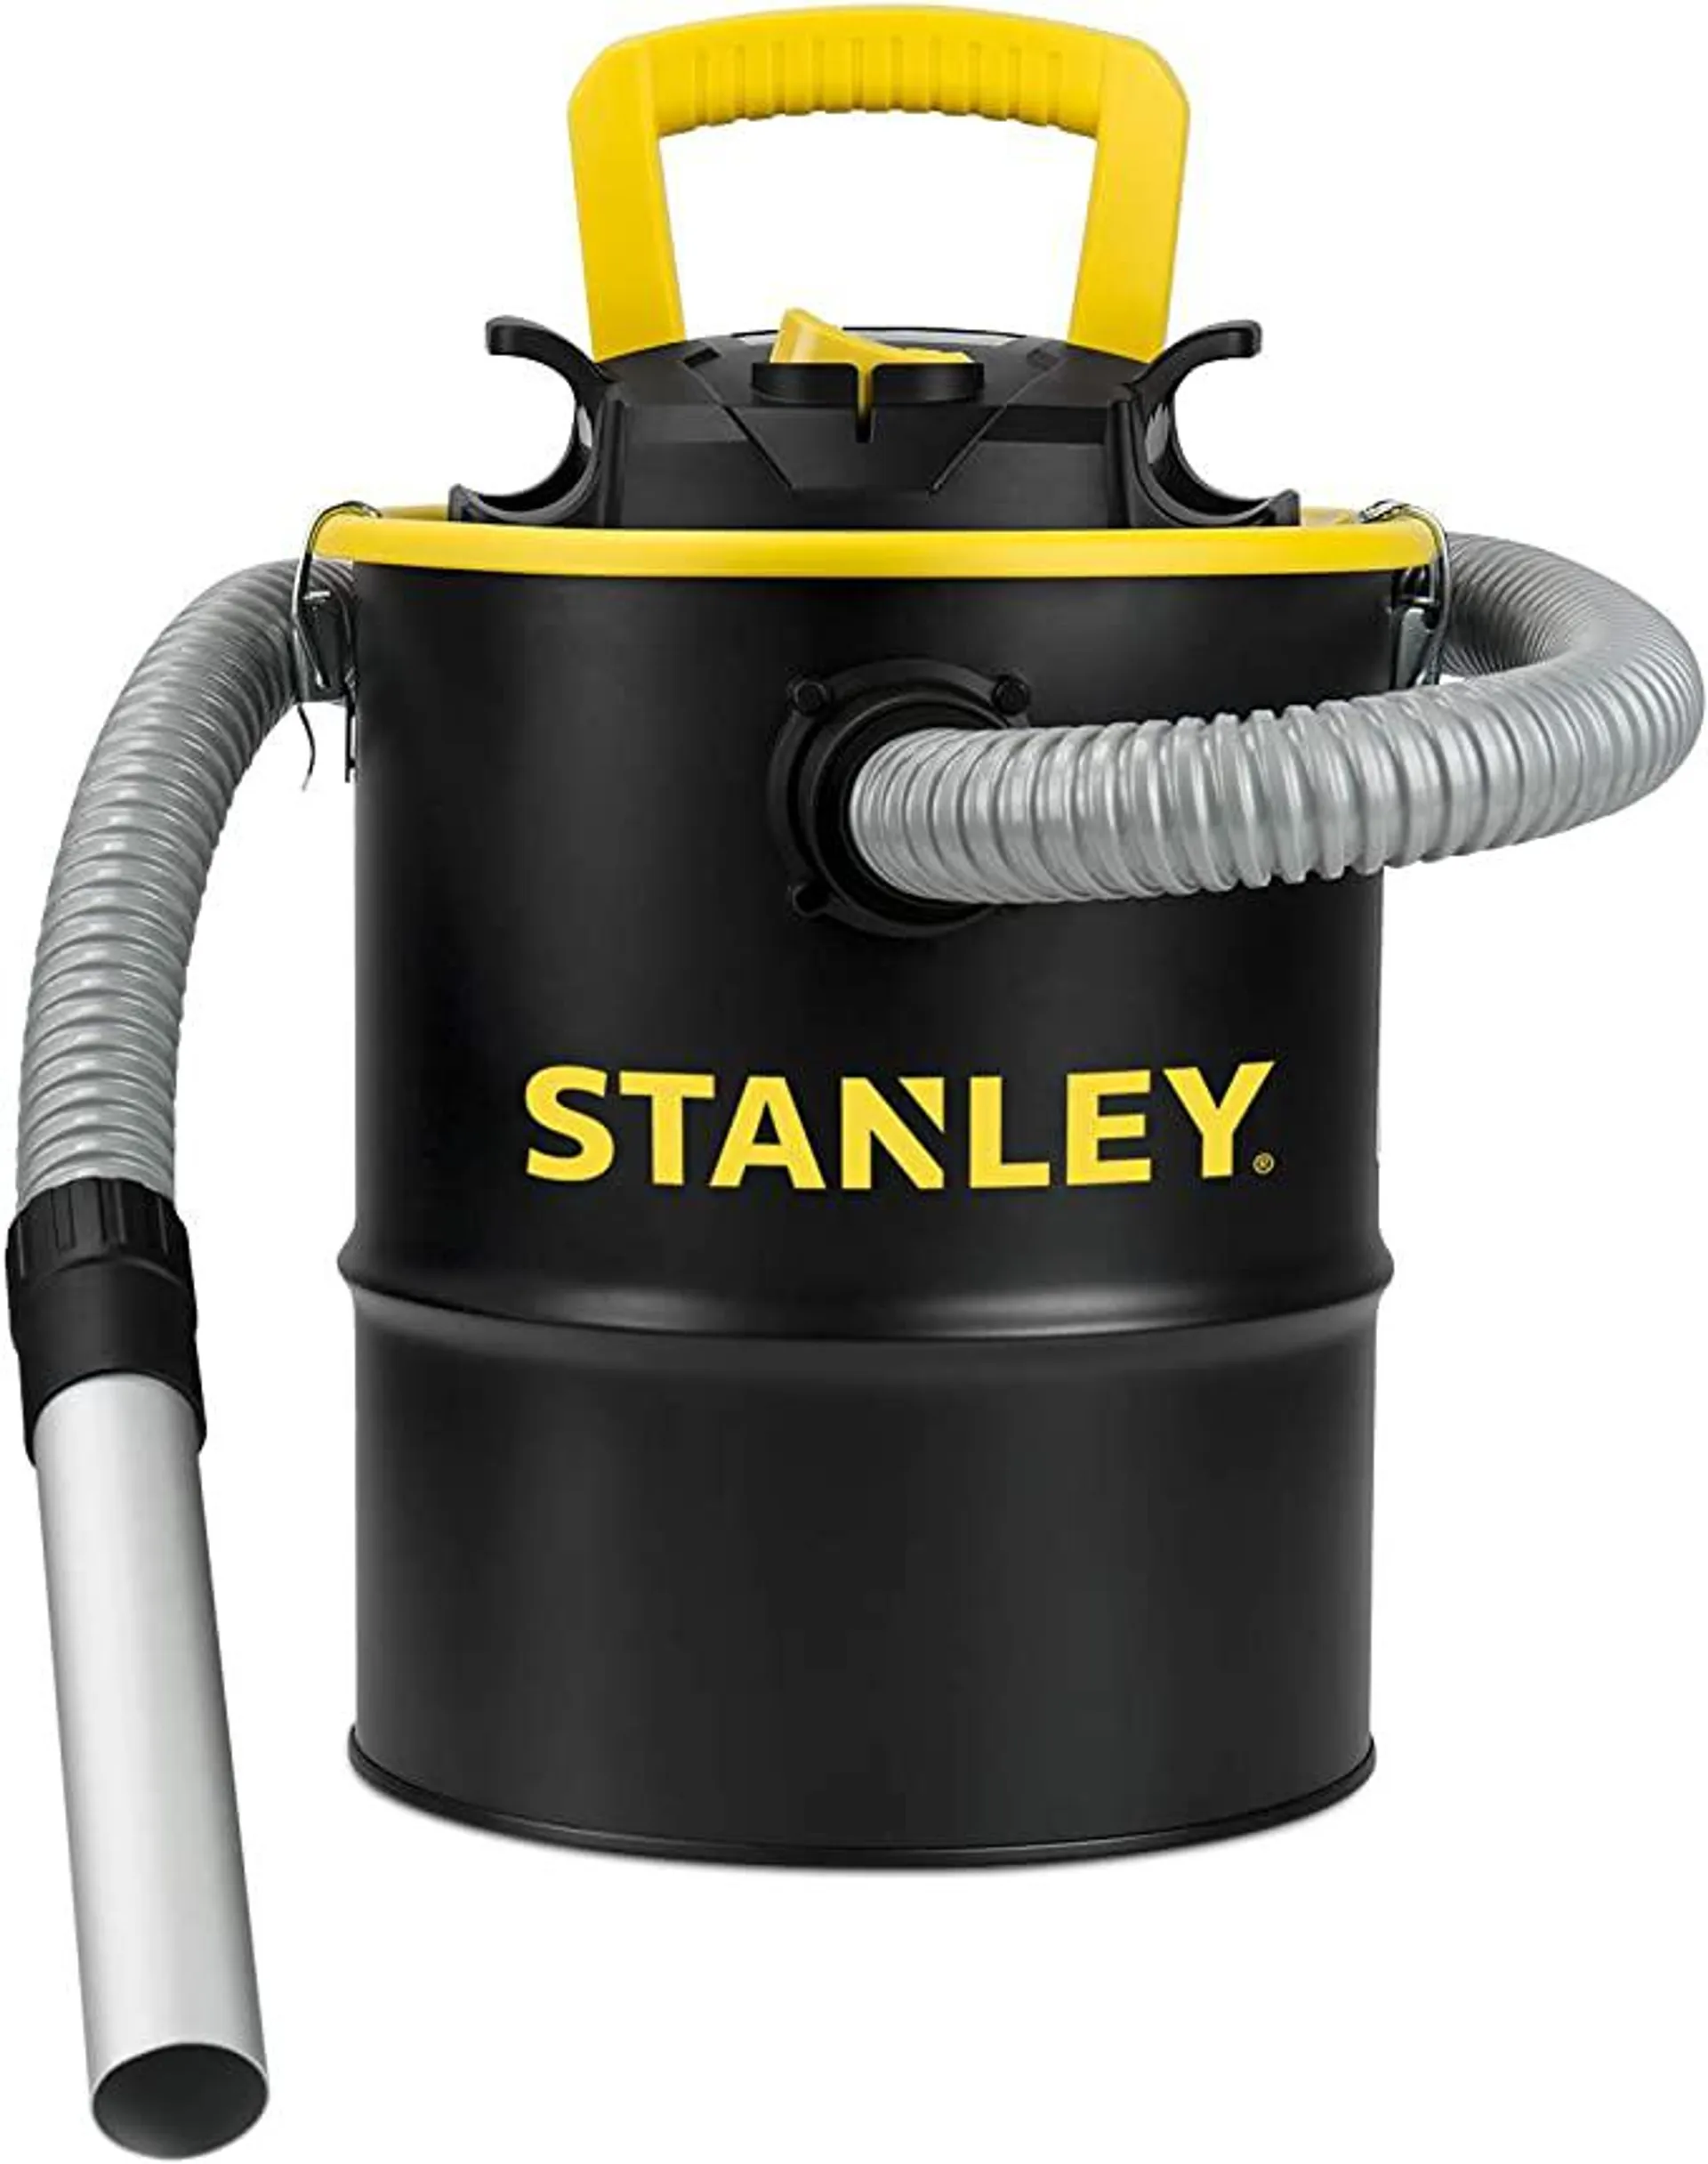 Stanley Ash Vacuum 4Gallon 4HP SL-18184, 4 Gallon, Black & Yellow